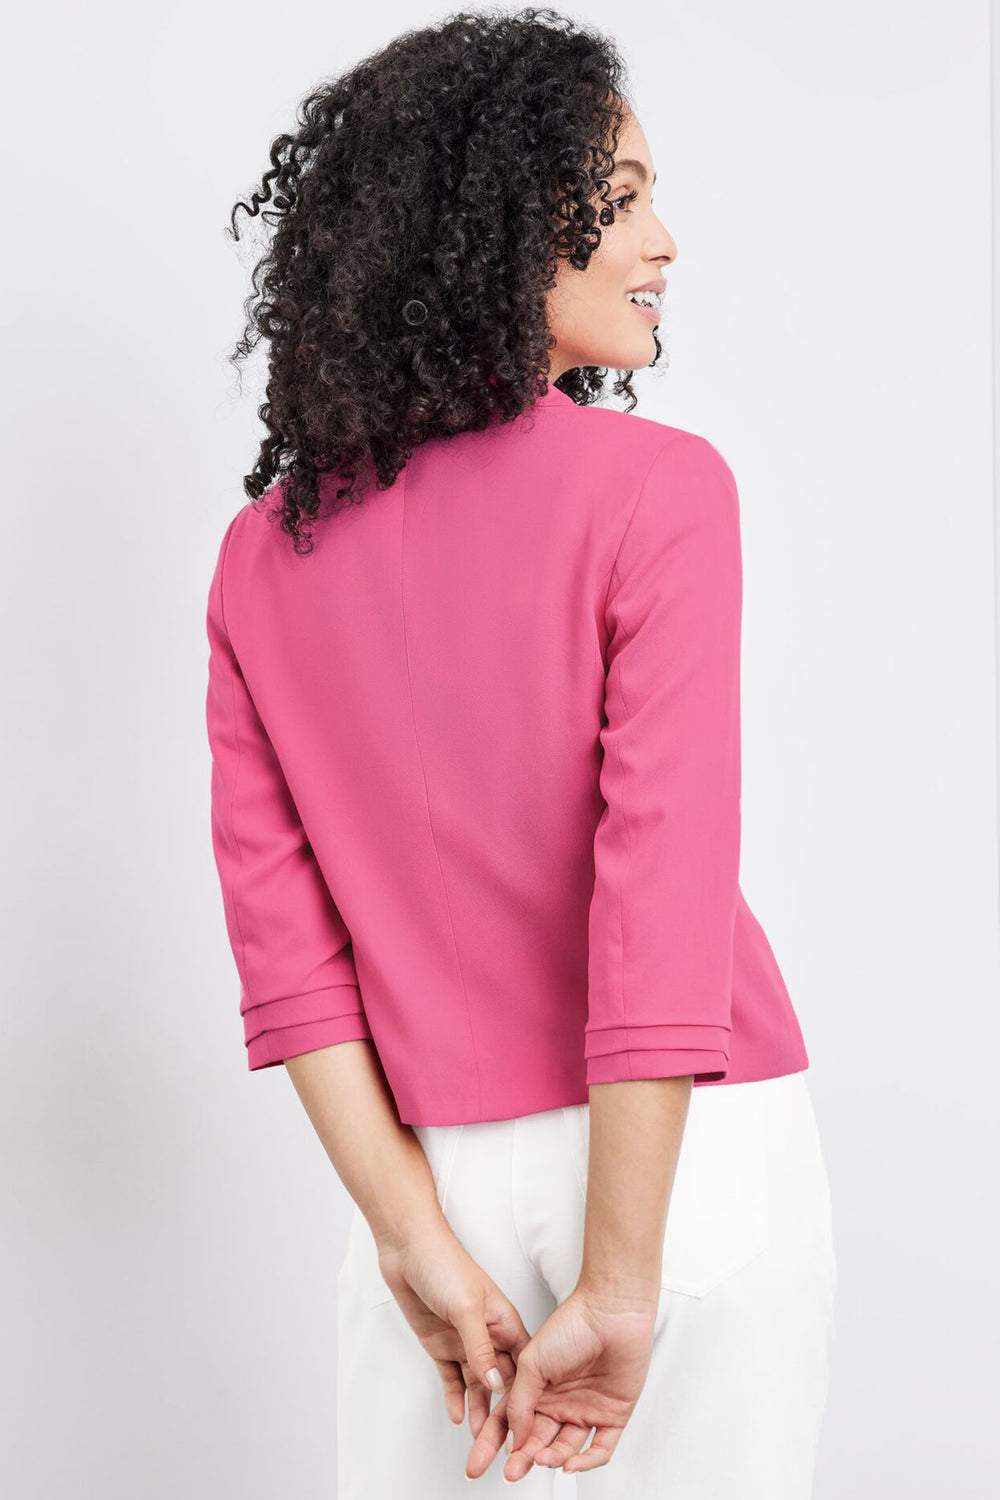 Gerry Weber 330041-31267 30913 Solar Pink Blazer Jacket - Experience Boutique